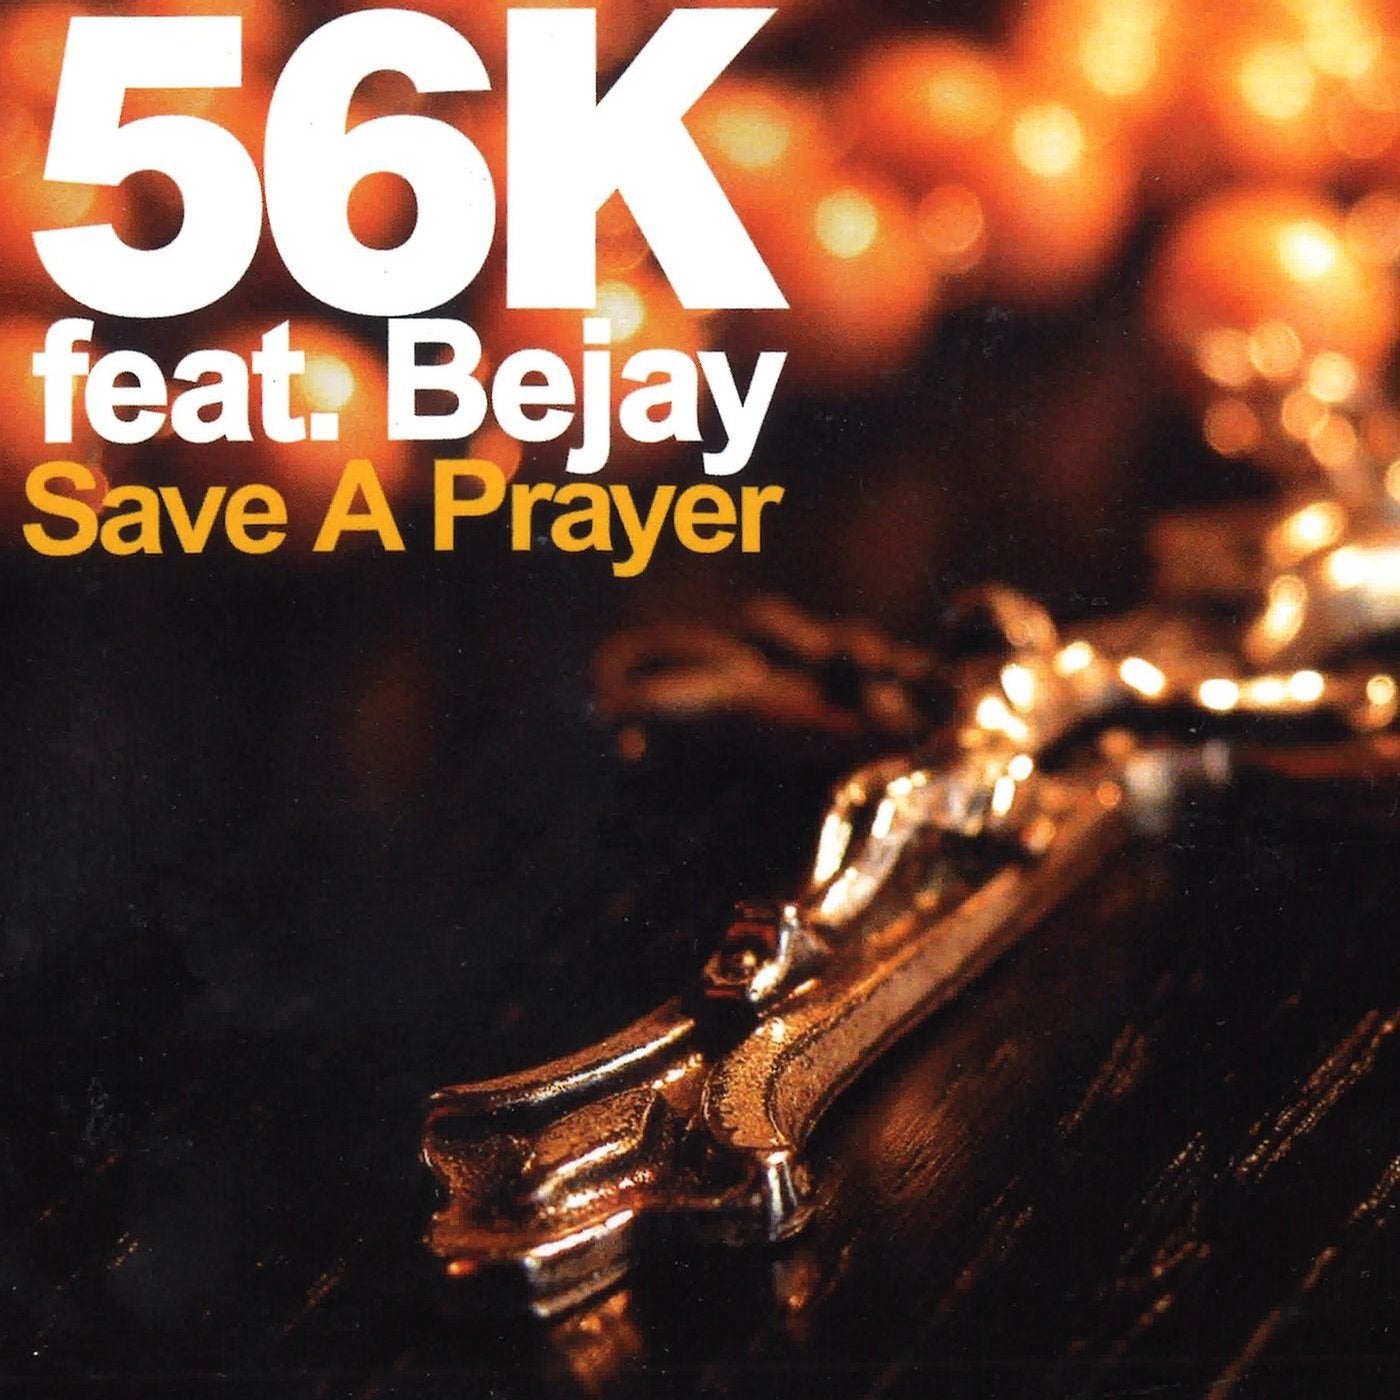 Save a Prayer